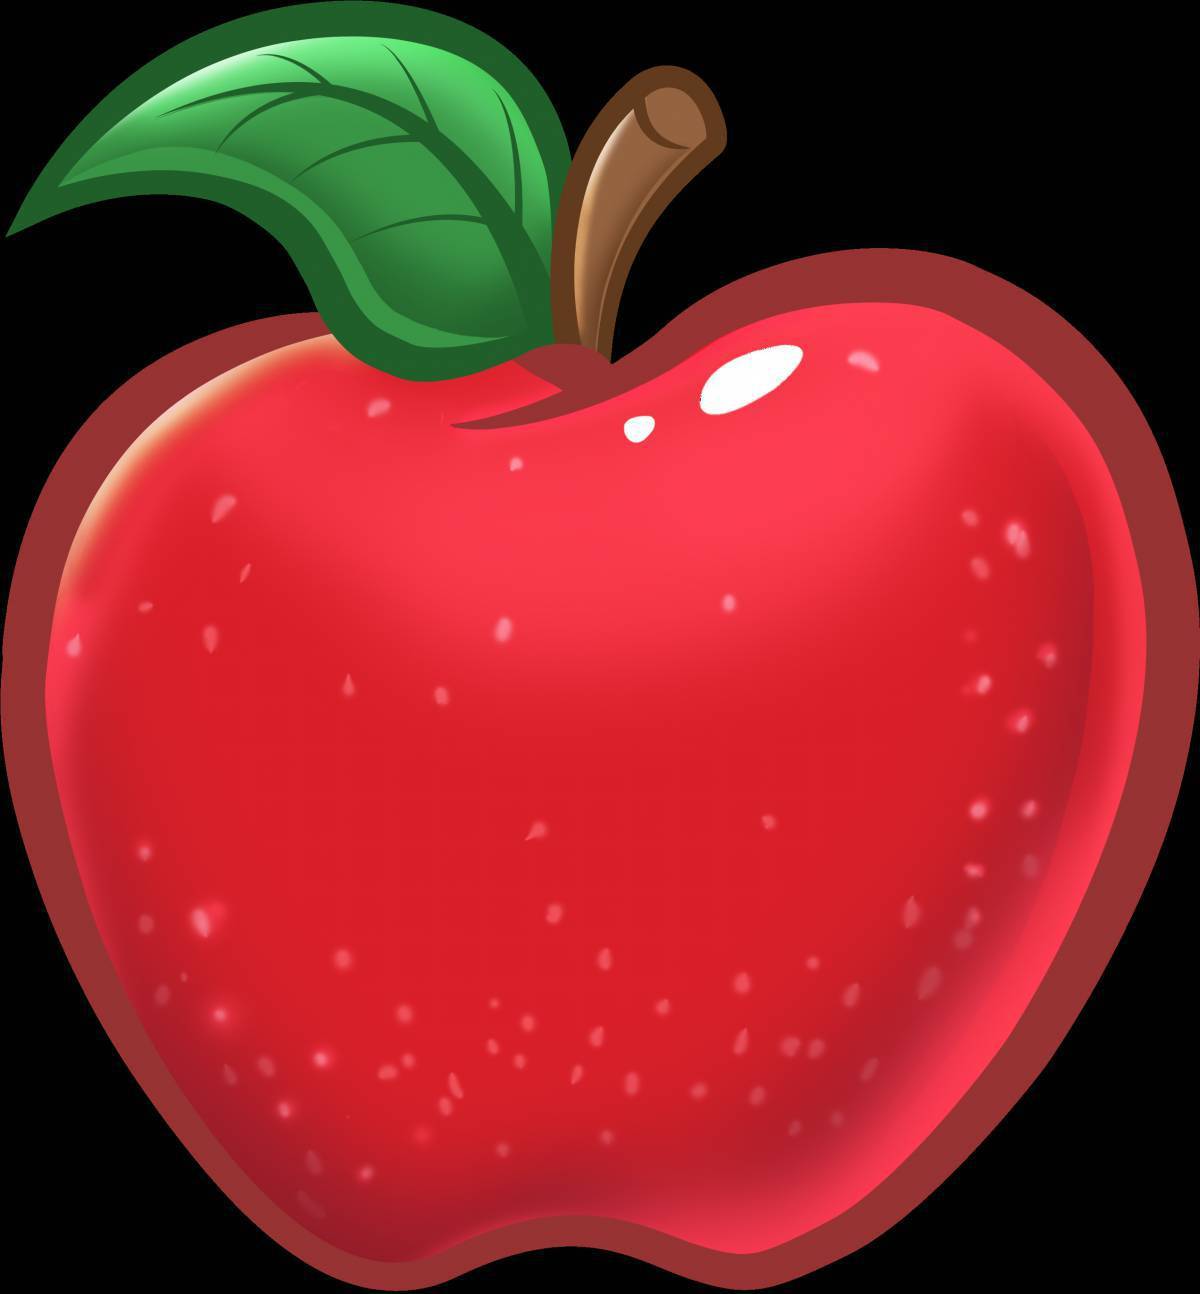 Mr apple. Картина яблоко на ногтях. Cute Apple. Алма картинка для детей.